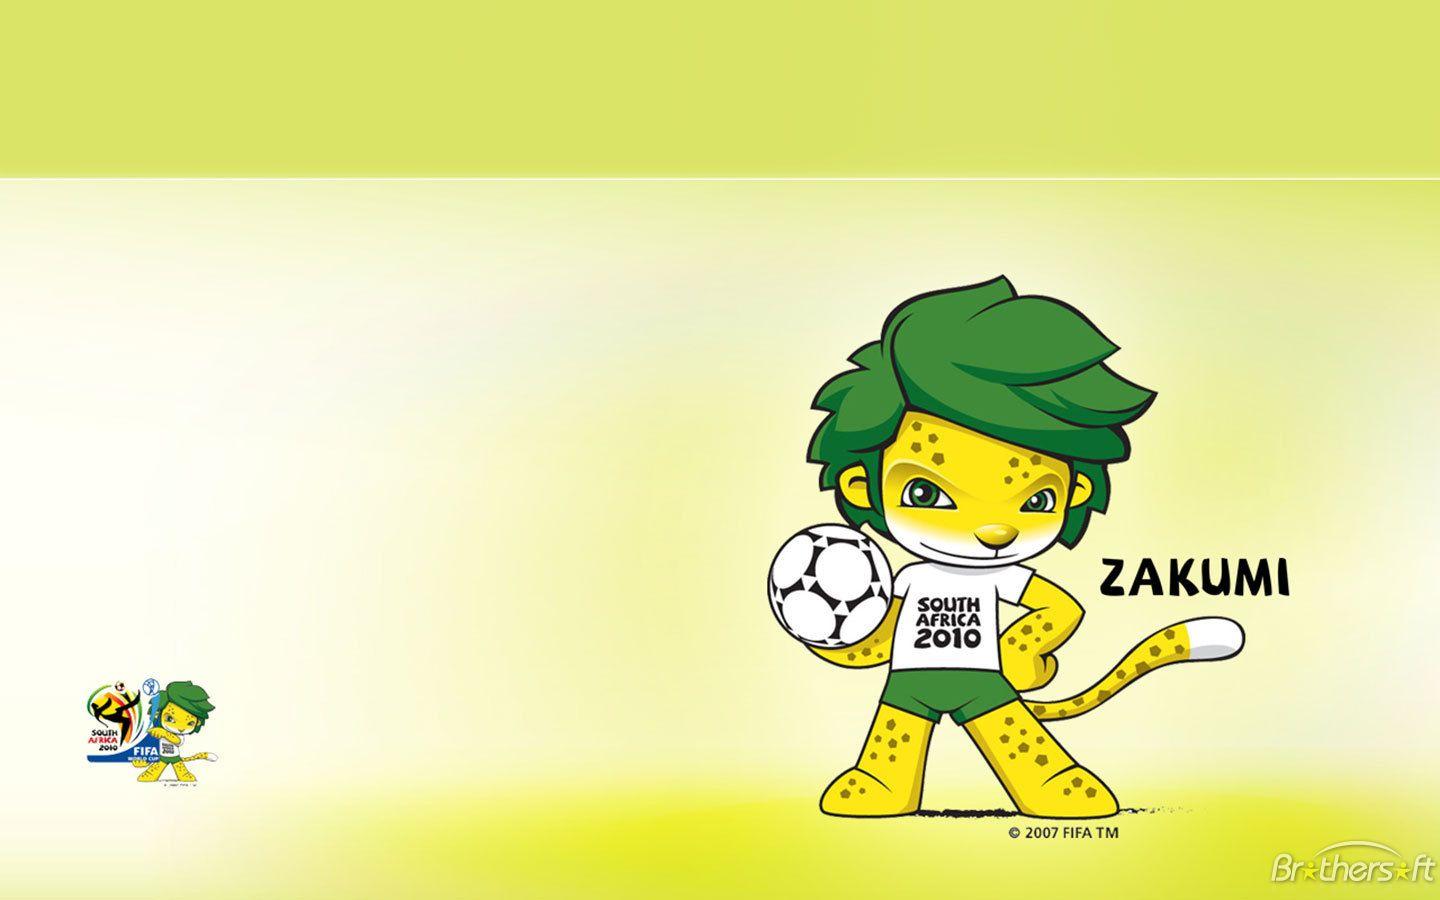 FIFA World Cup 2010 Mascot Widescreen Wallpaper for Mac free Download